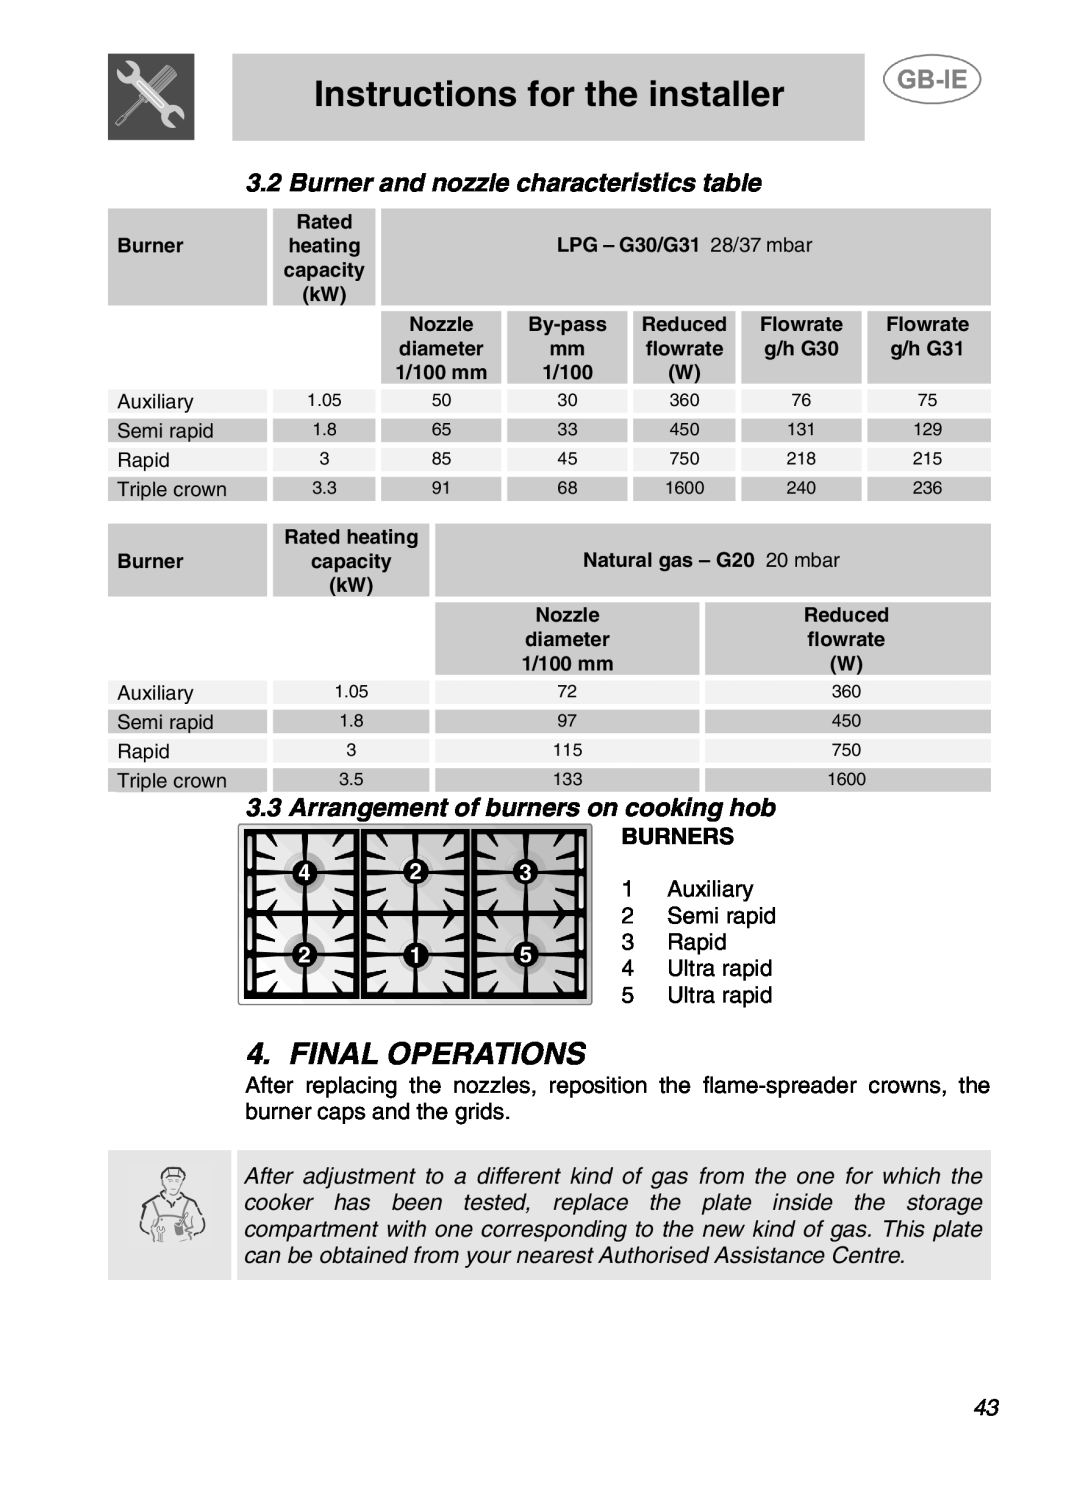 Smeg A2-5 Final Operations, Burner and nozzle characteristics table, 3.3Arrangement of burners on cooking hob, Burners 